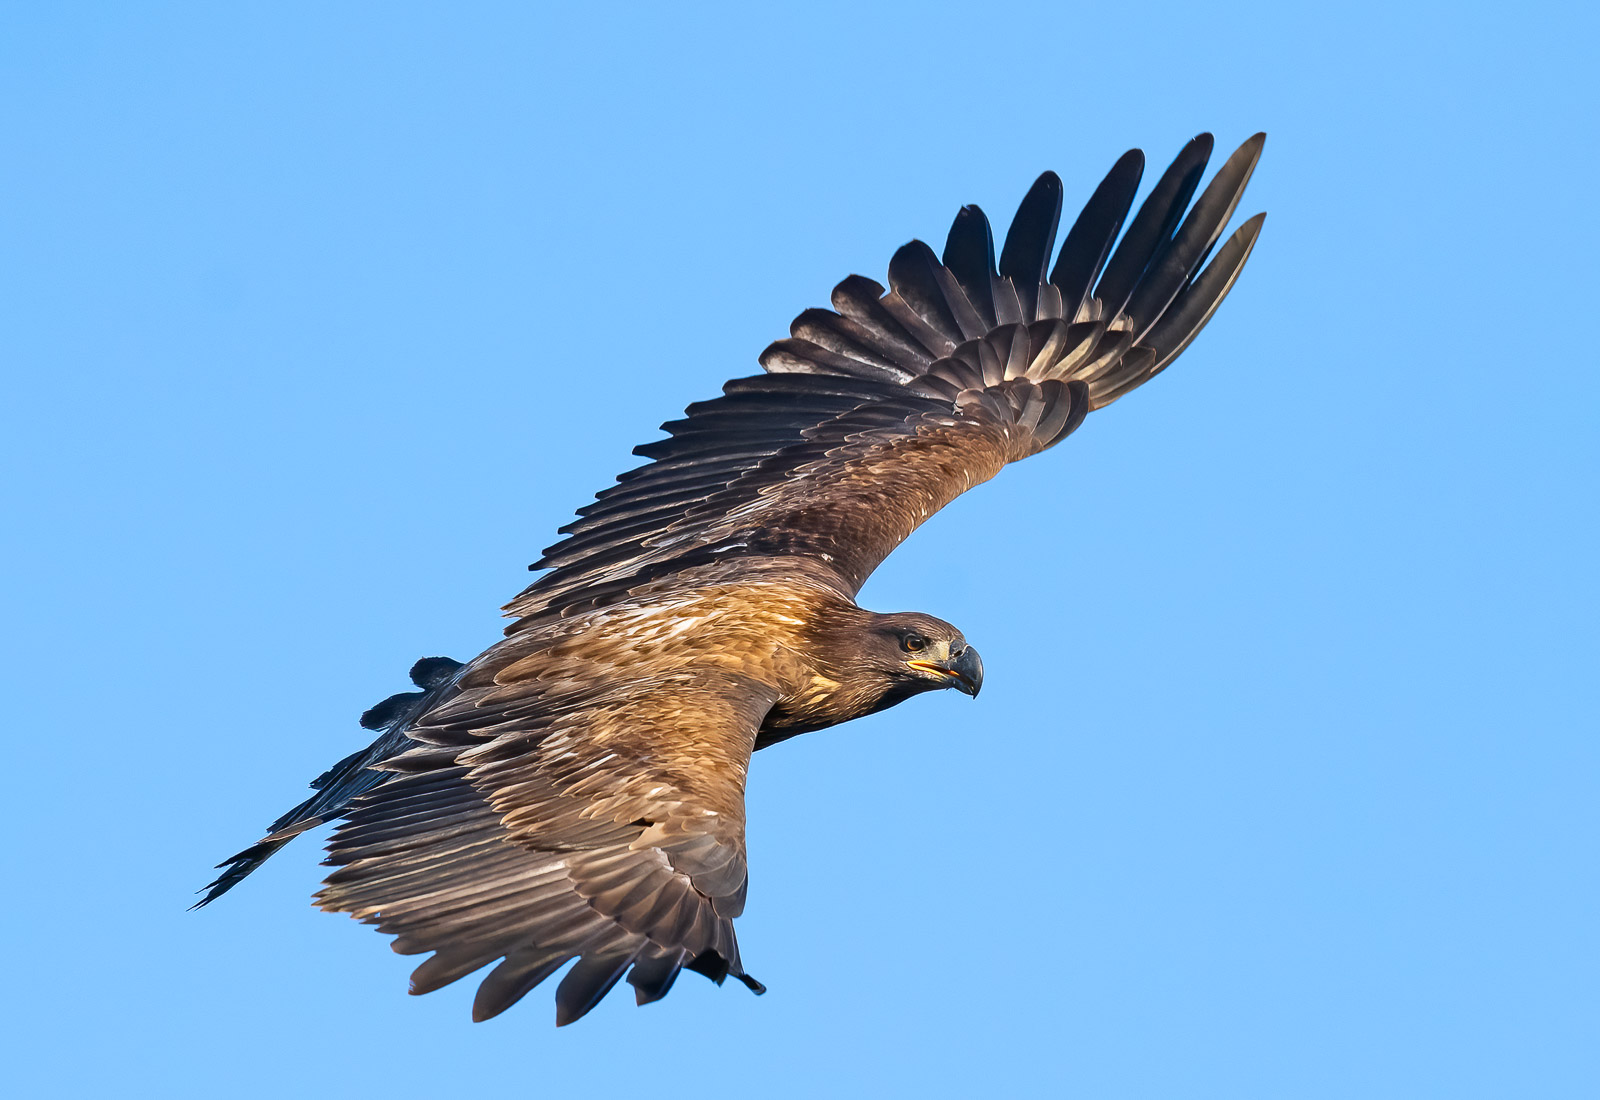 Juvenile Bald Eagle in flight